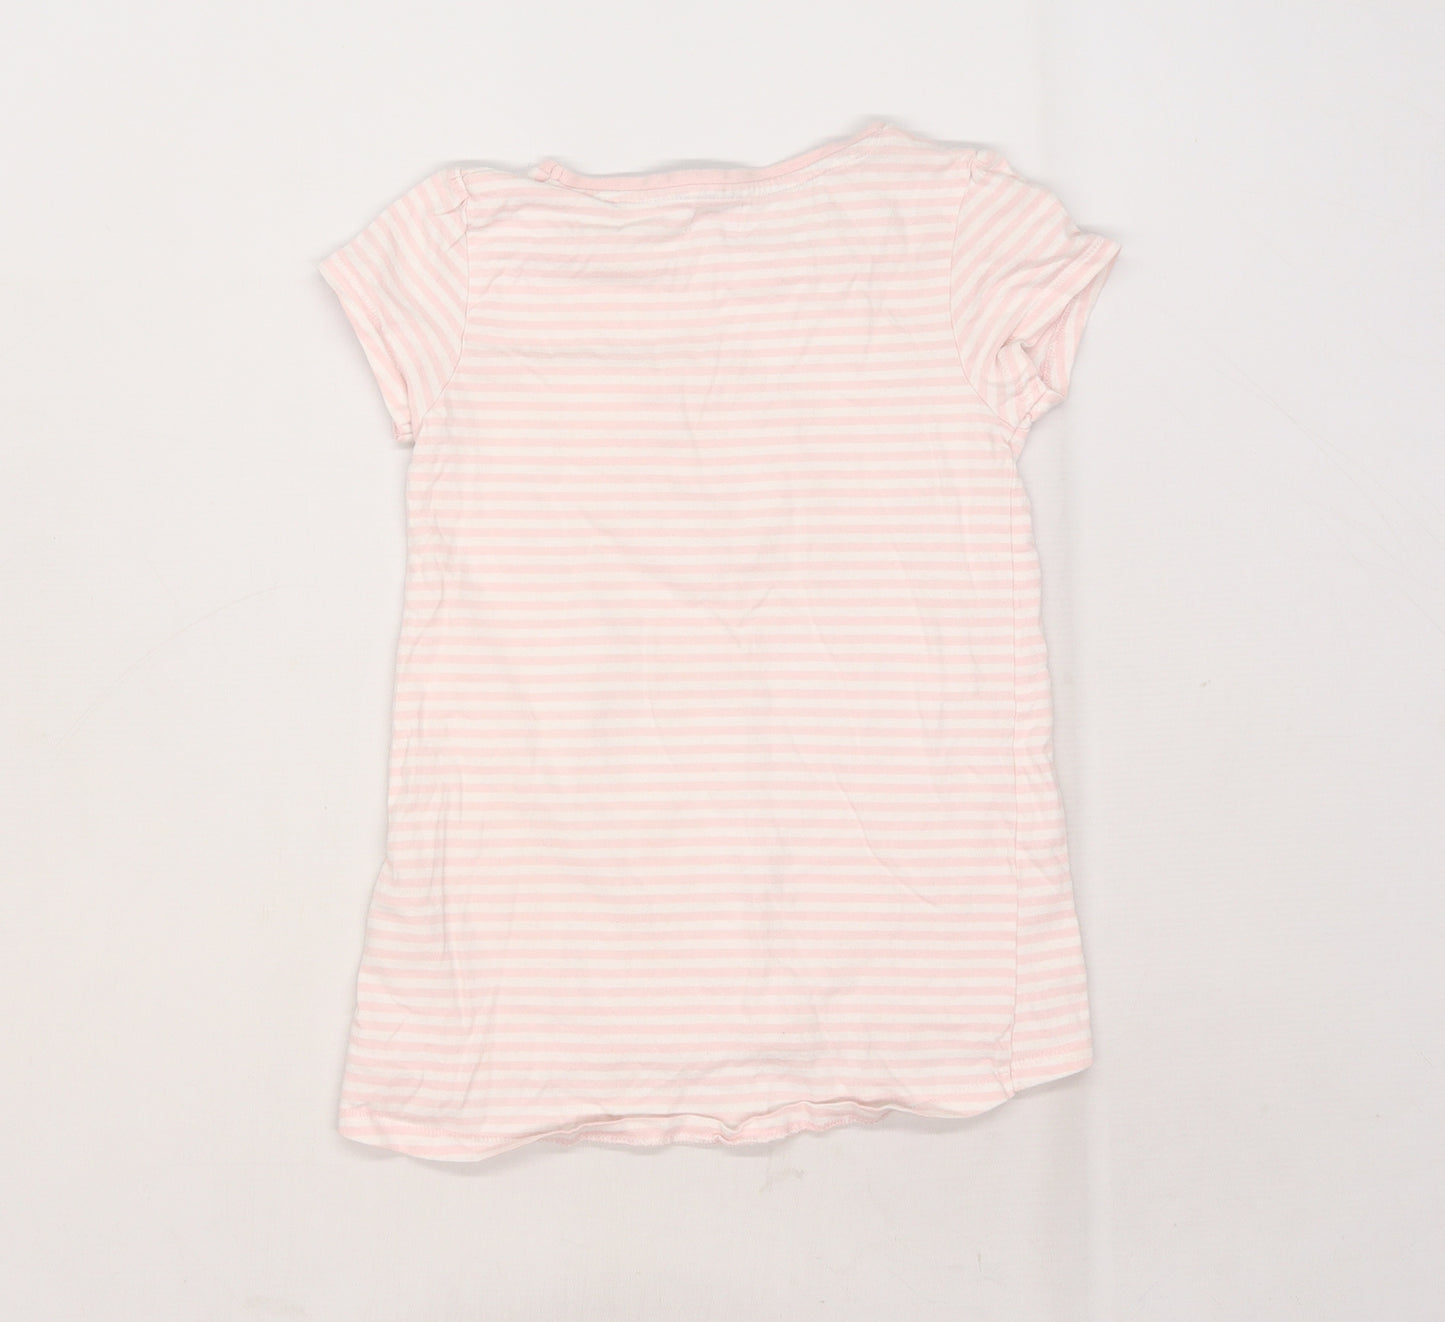 F&F Girls Pink Striped  Basic T-Shirt Size 6-7 Years  - Love heart